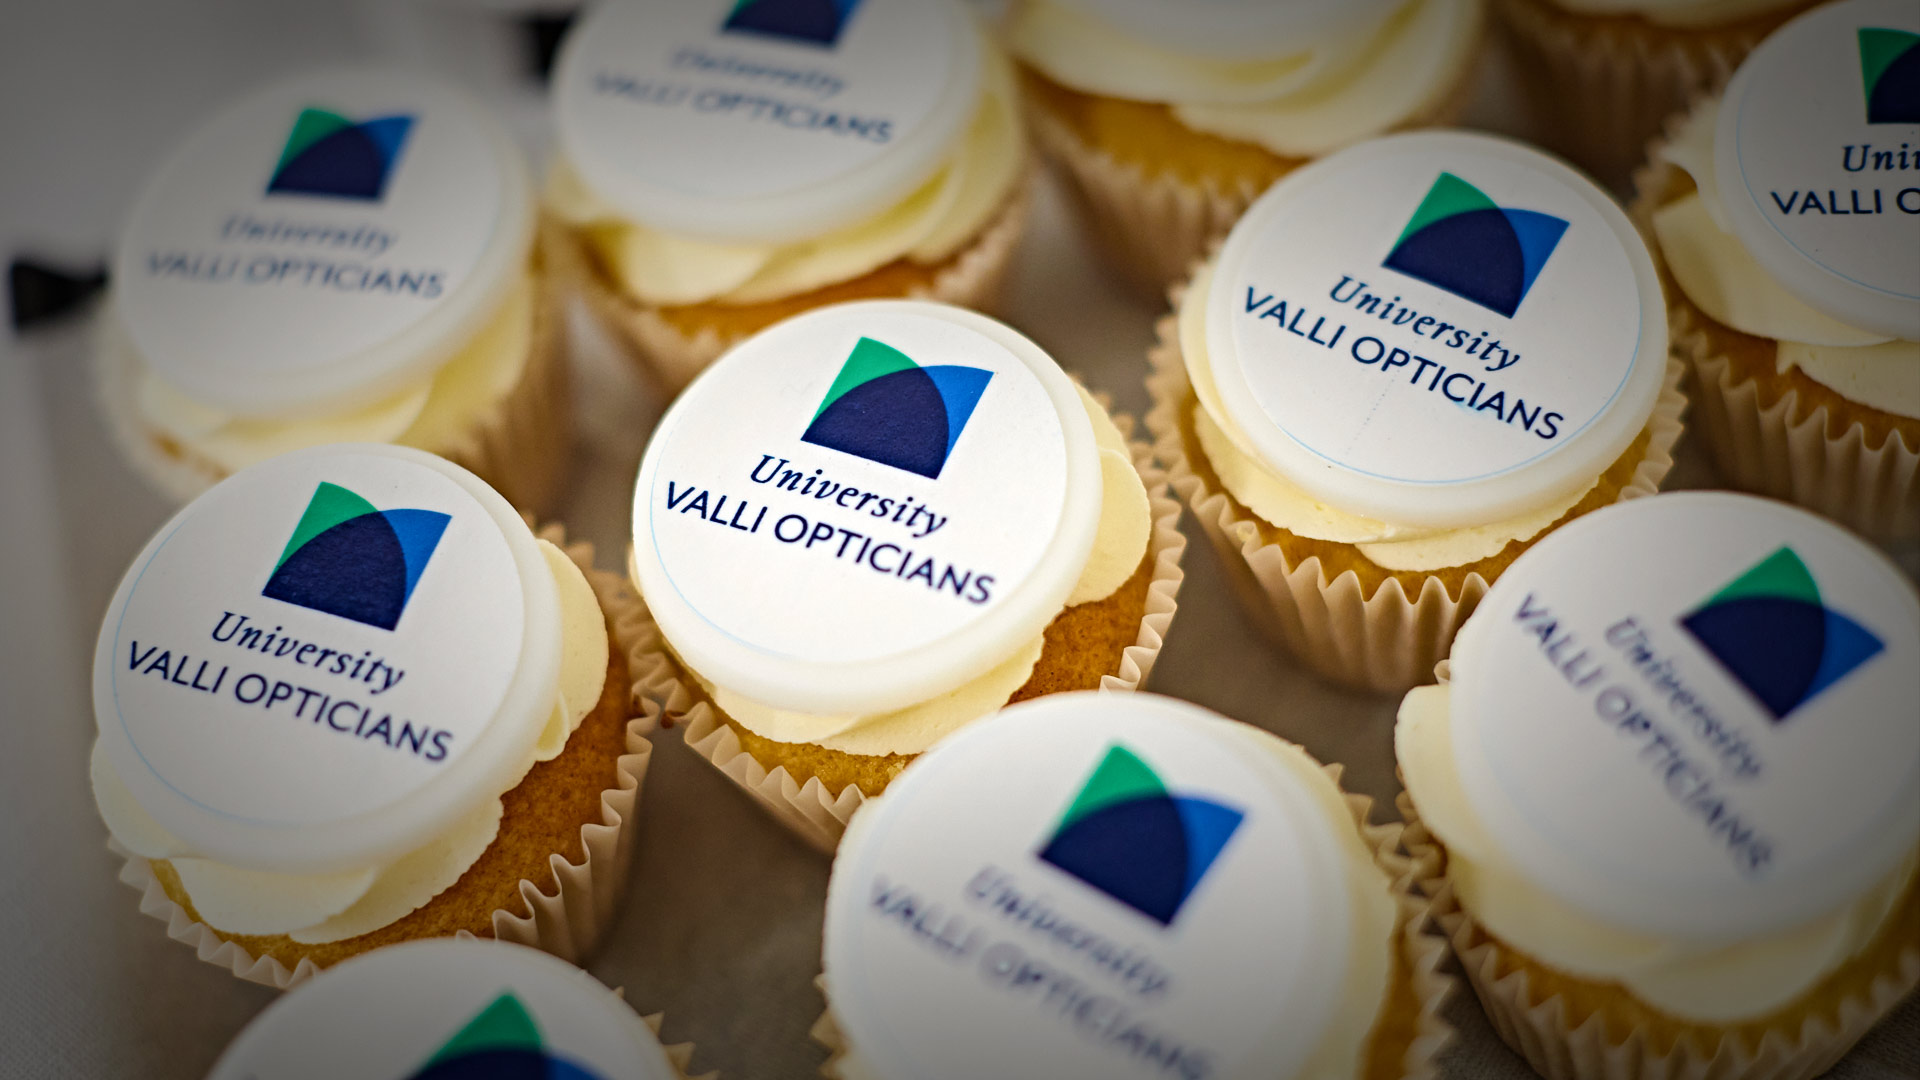 Cupcakes with the University Valli Opticians logo